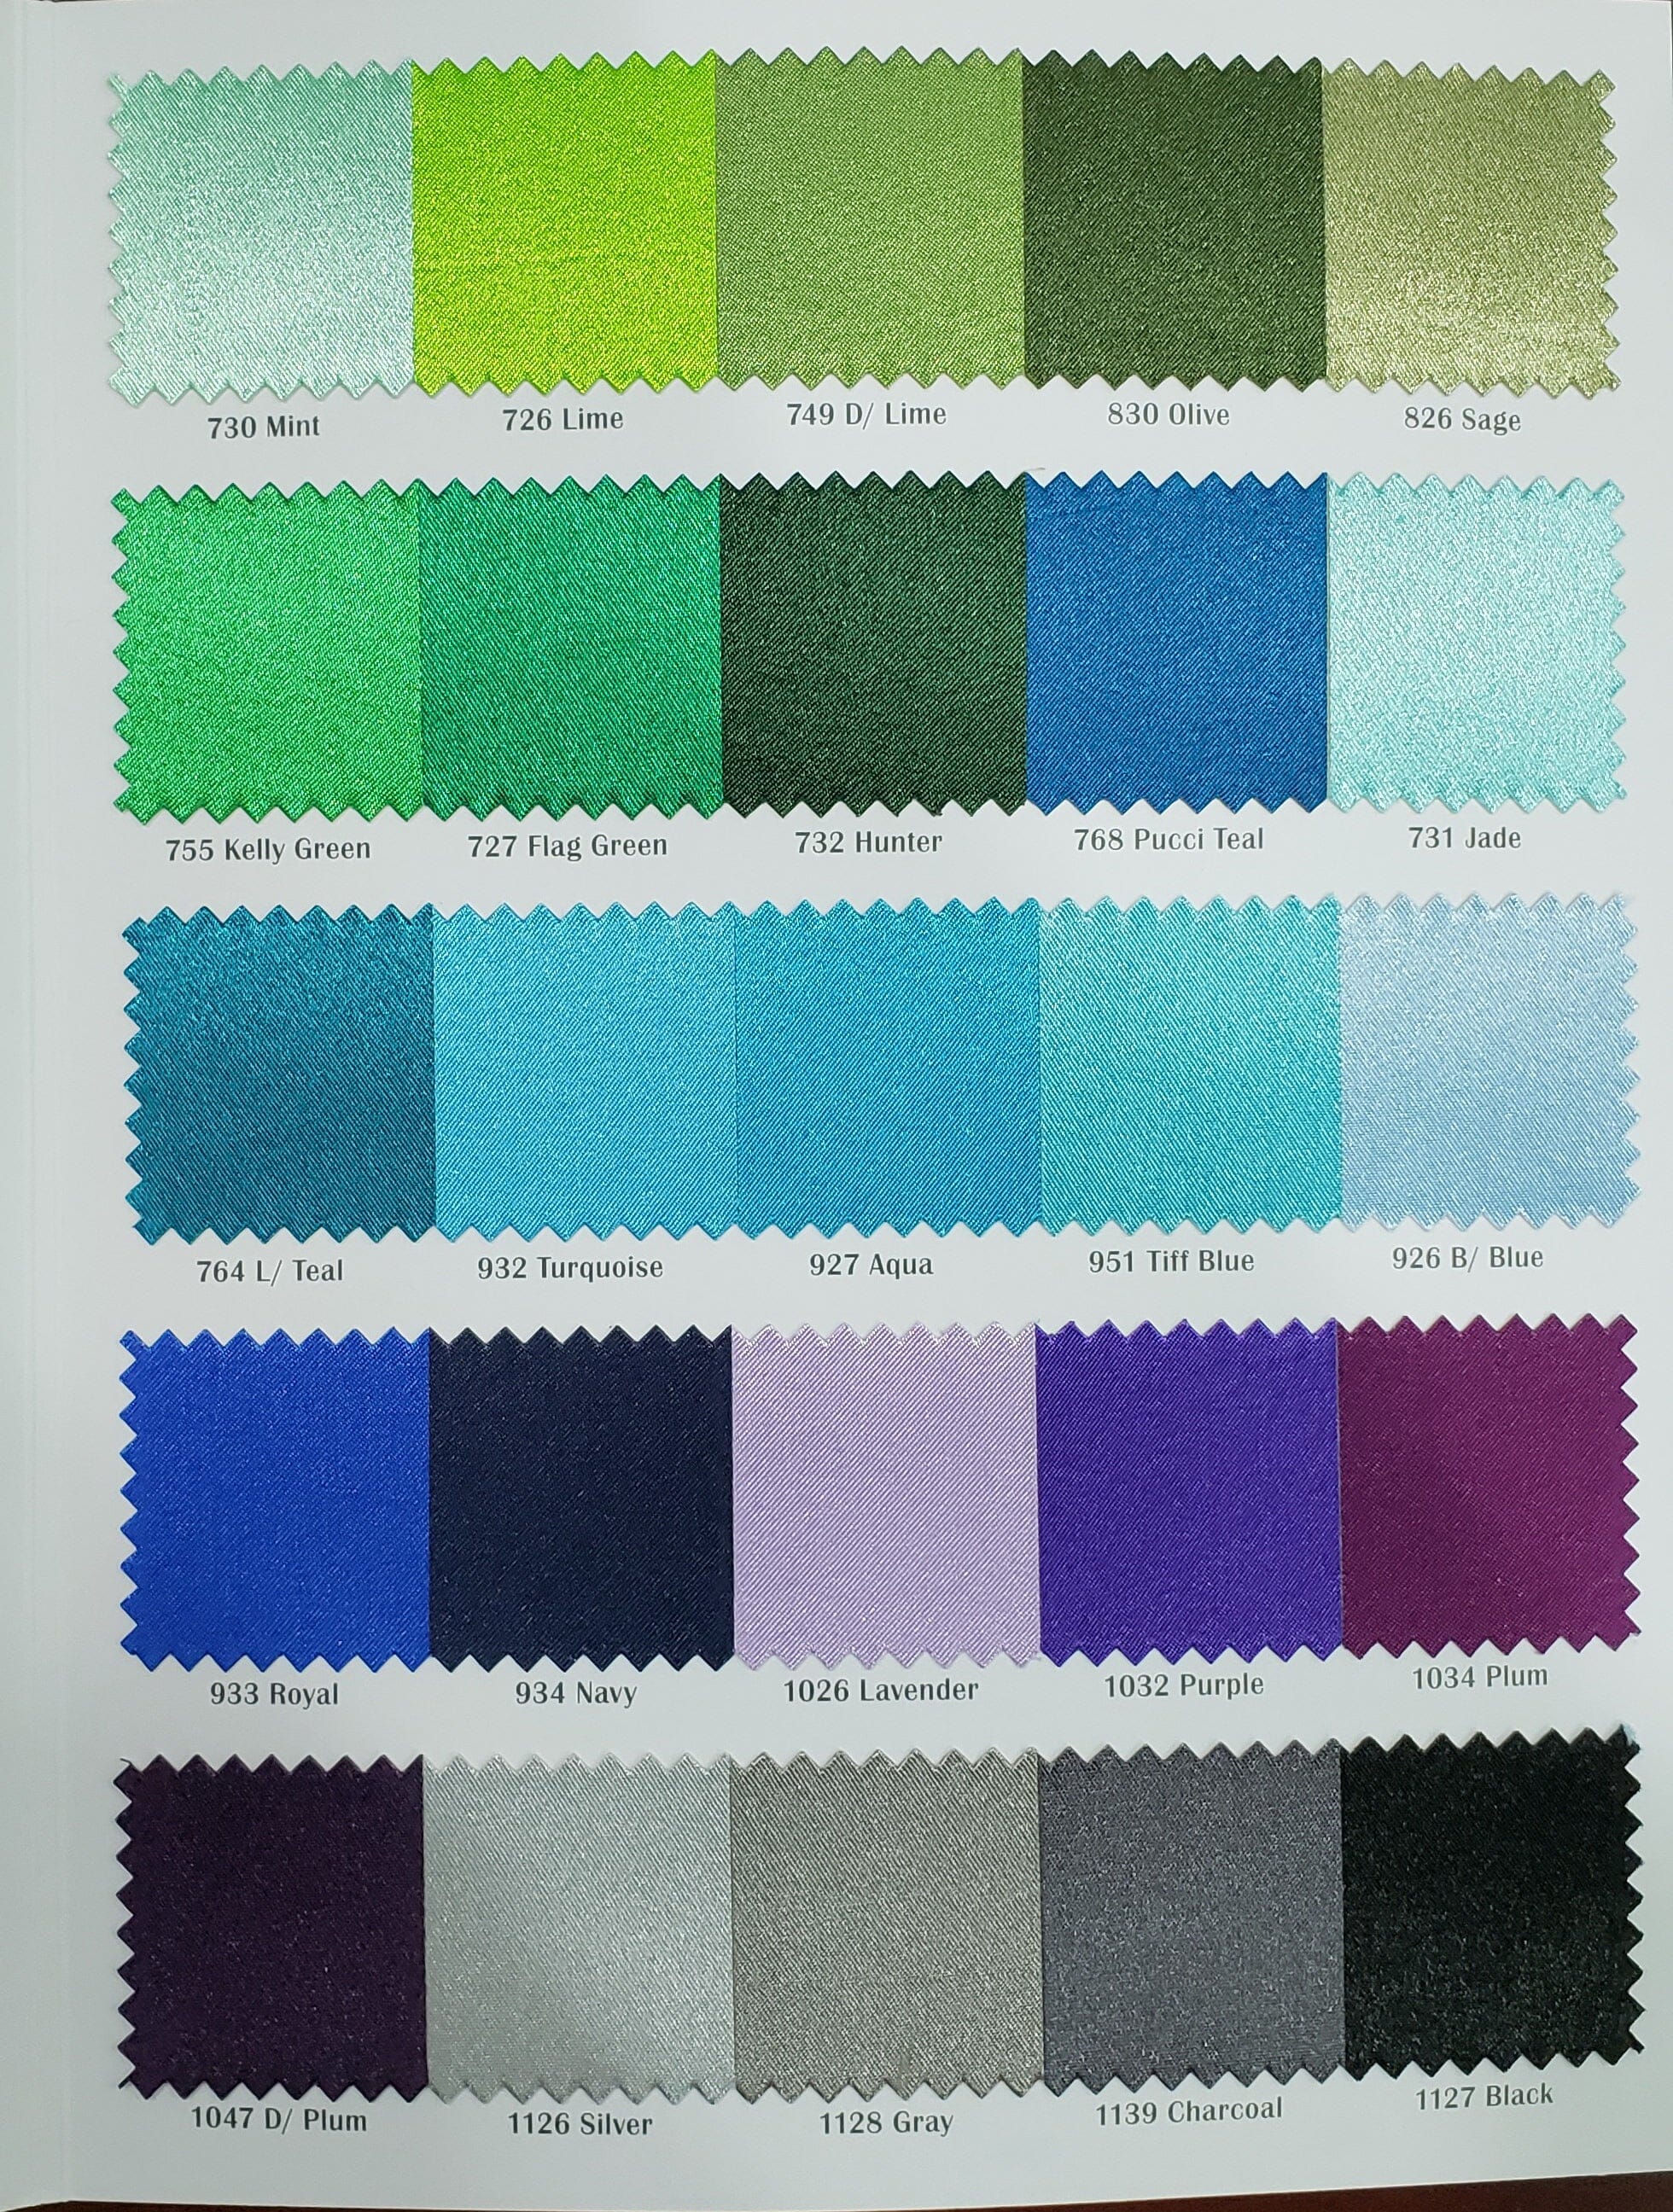 Bridal Satin Fabric | Shiny Bridal Satin | 60" Wide | Multiple Colors | Continuous Yards | Fabric mytextilefabric 